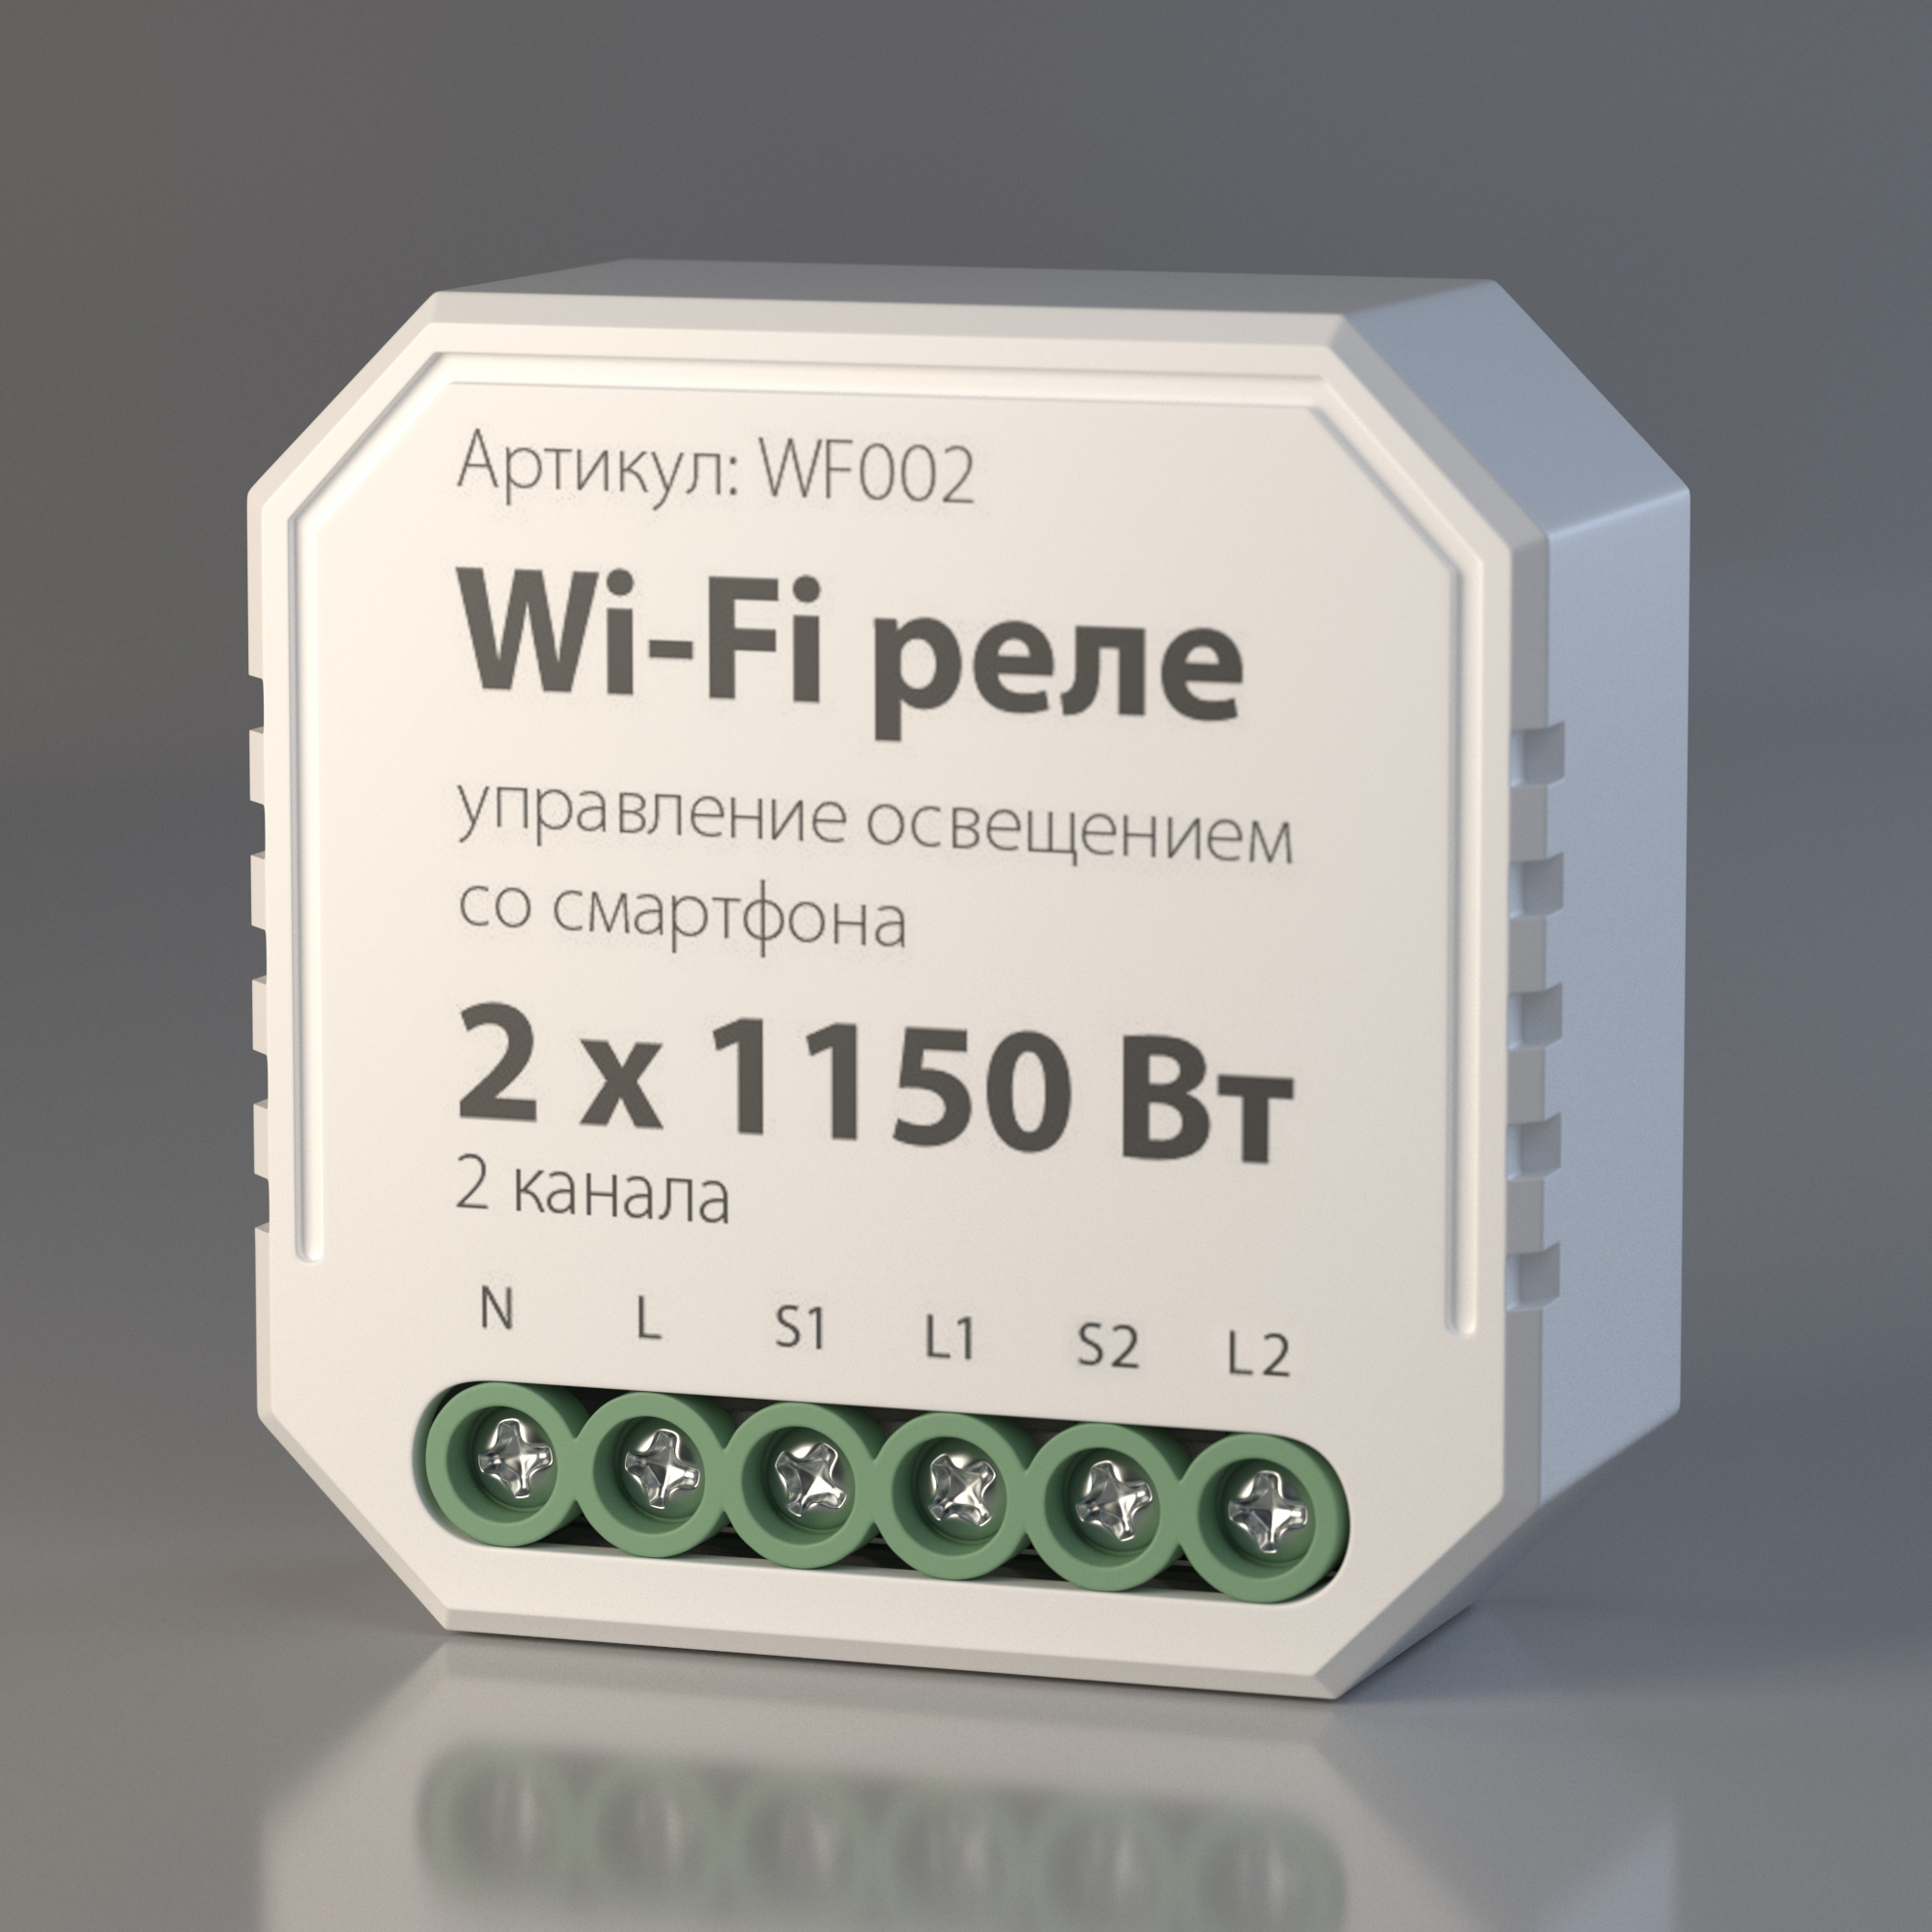 Wi-Fi  Elektrostandard WF WF002   